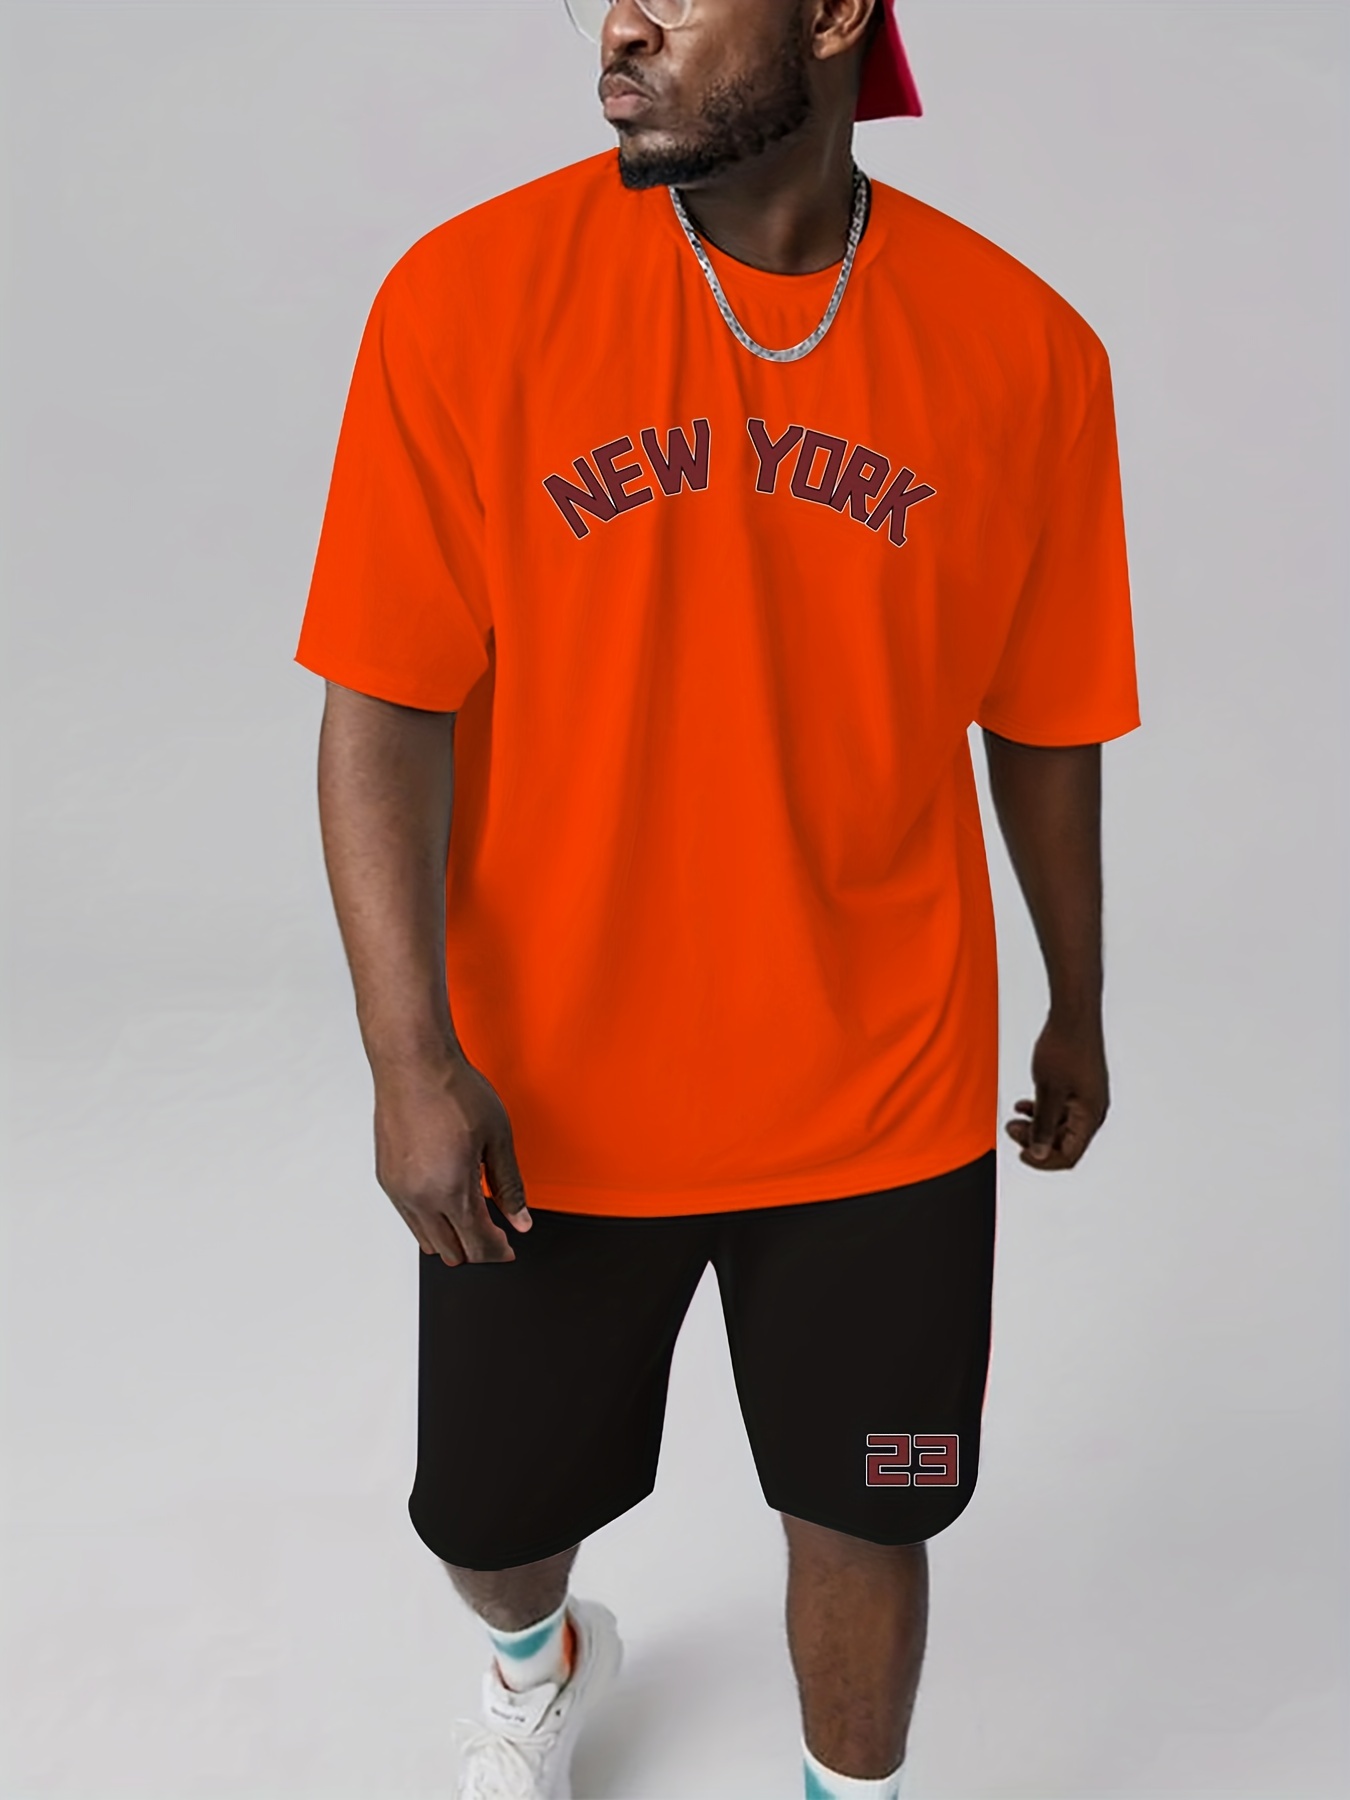 Men's new York Graphic Print T-shirt Shorts Set, Casual Fashion